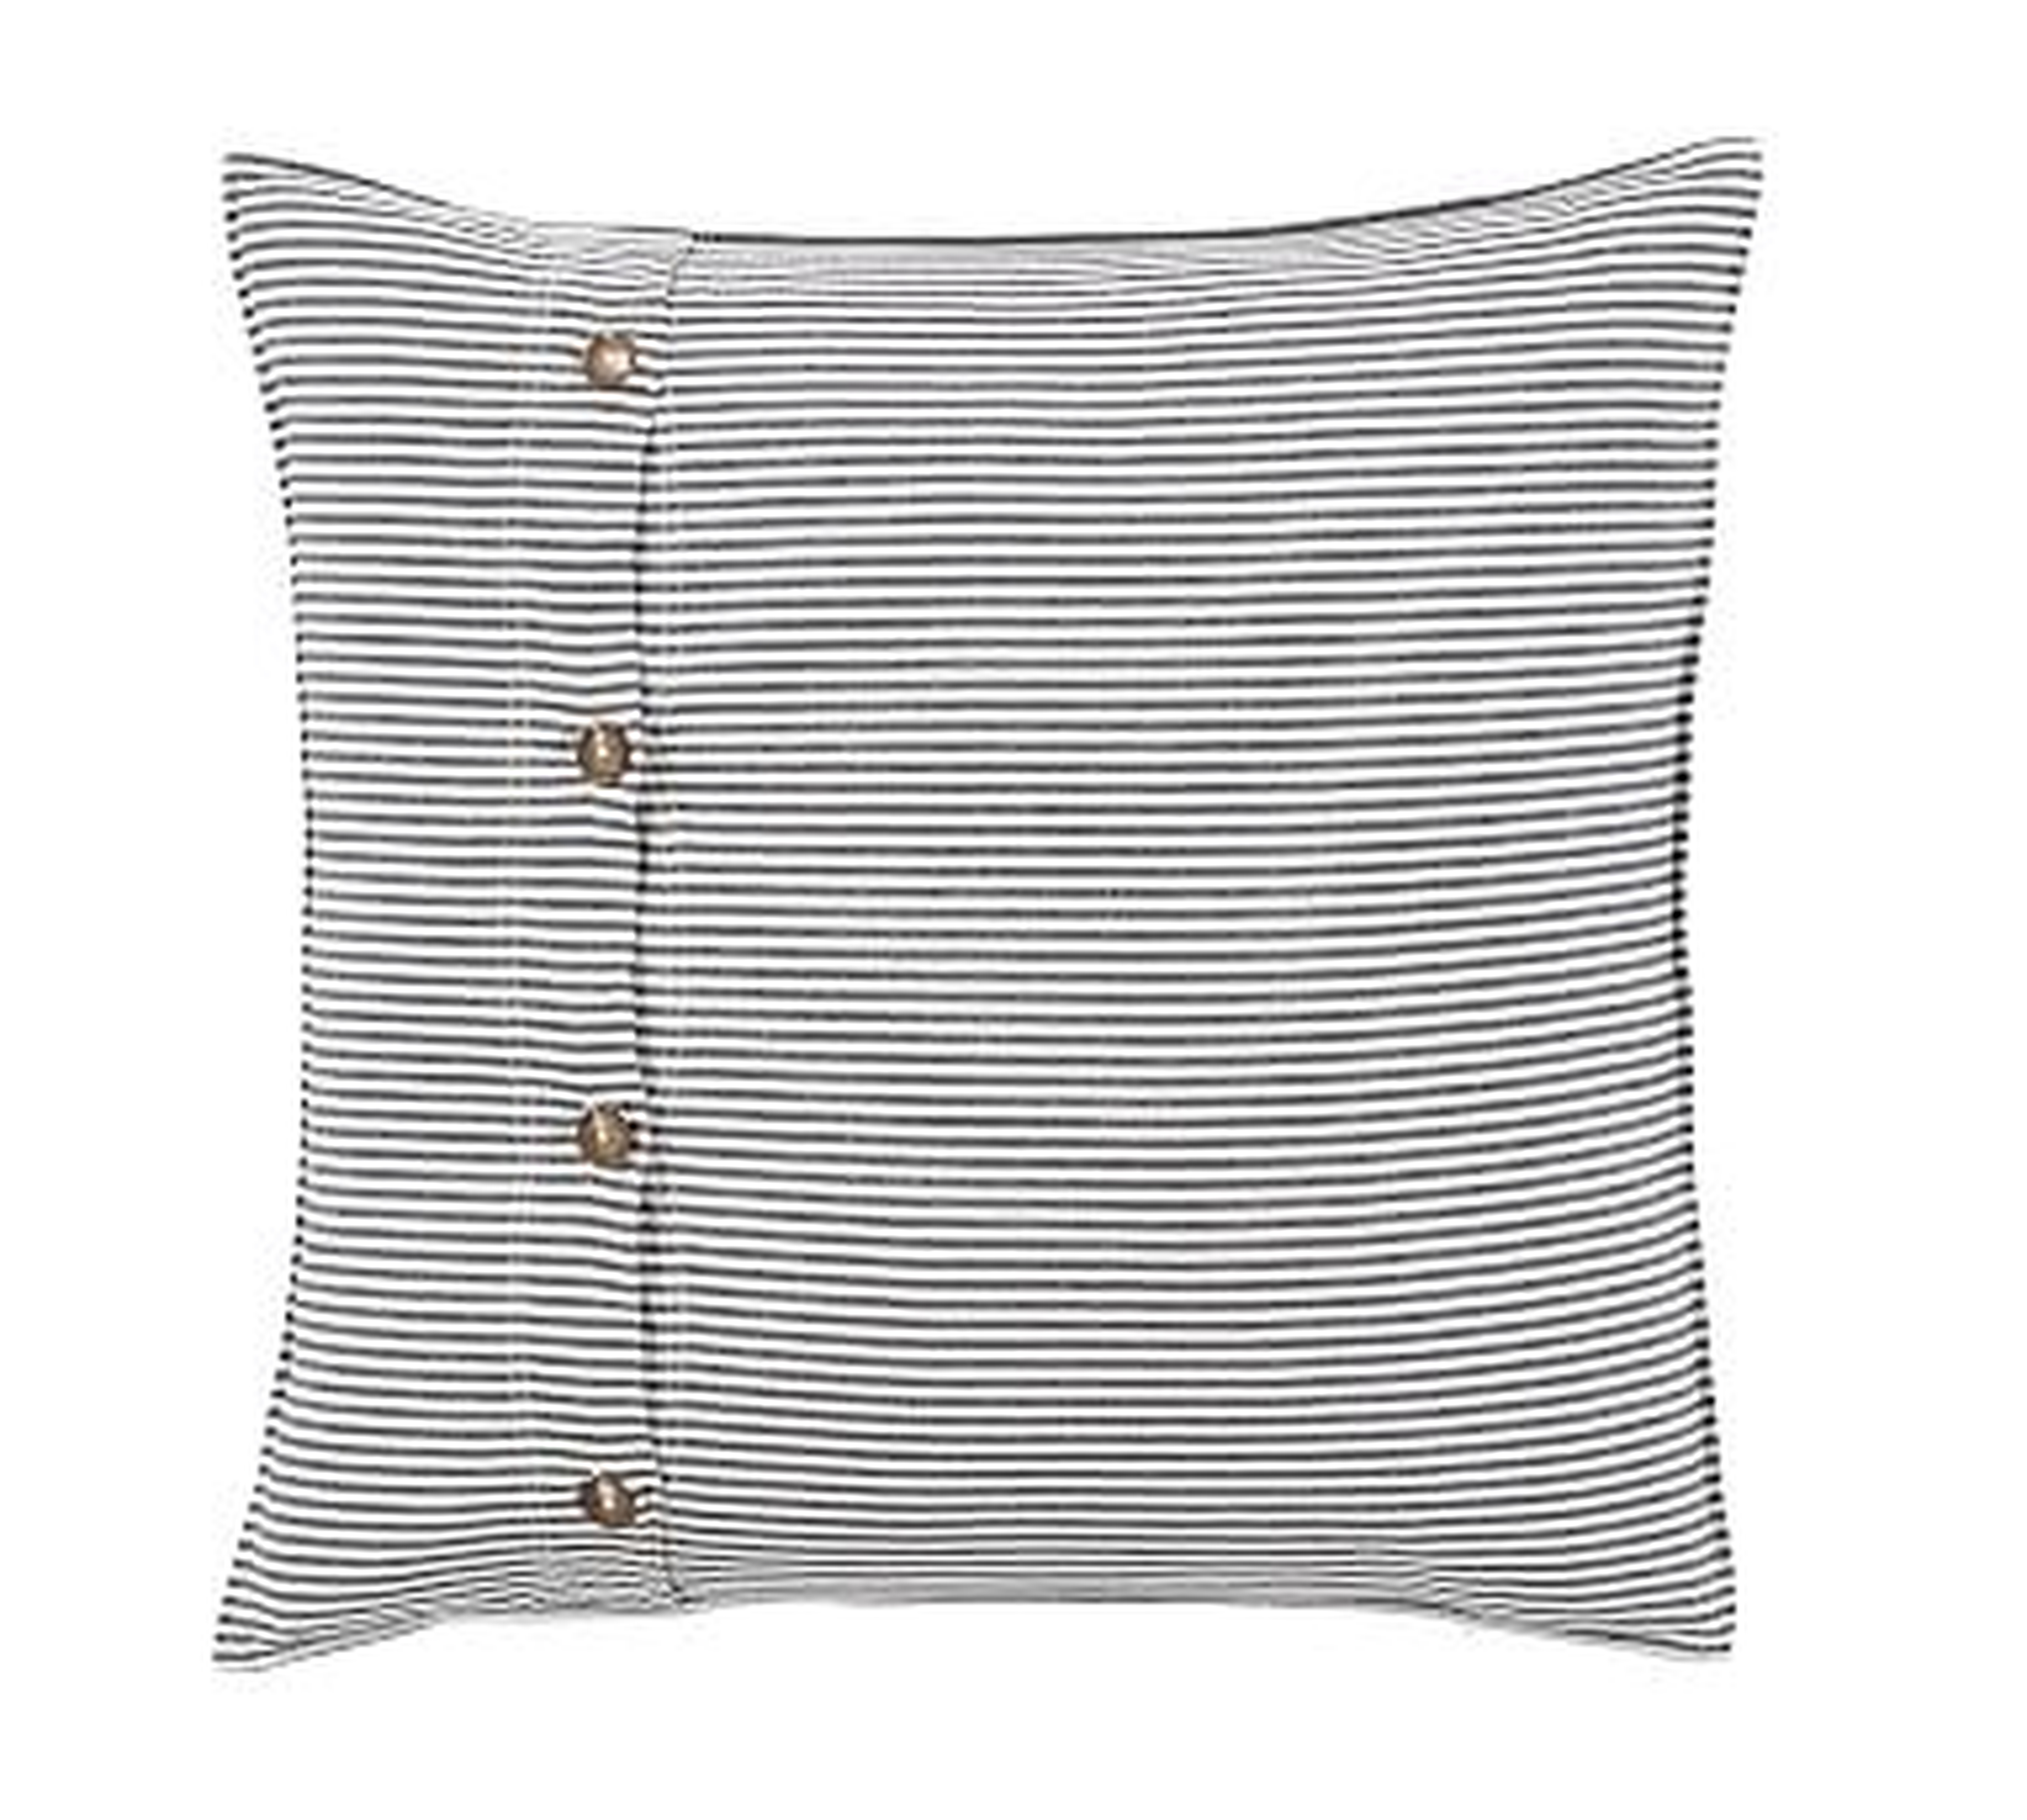 Wheaton Striped Linen/Cotton Sham, Euro, Navy - Pottery Barn